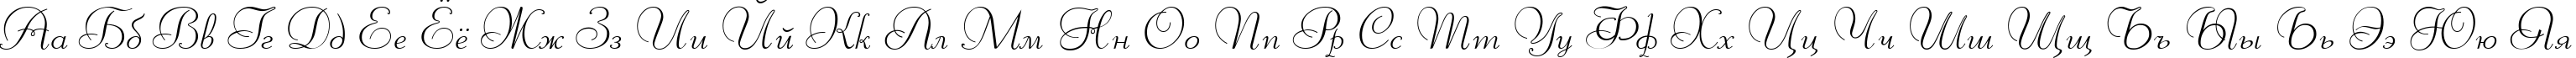 Пример написания русского алфавита шрифтом Liberty TL